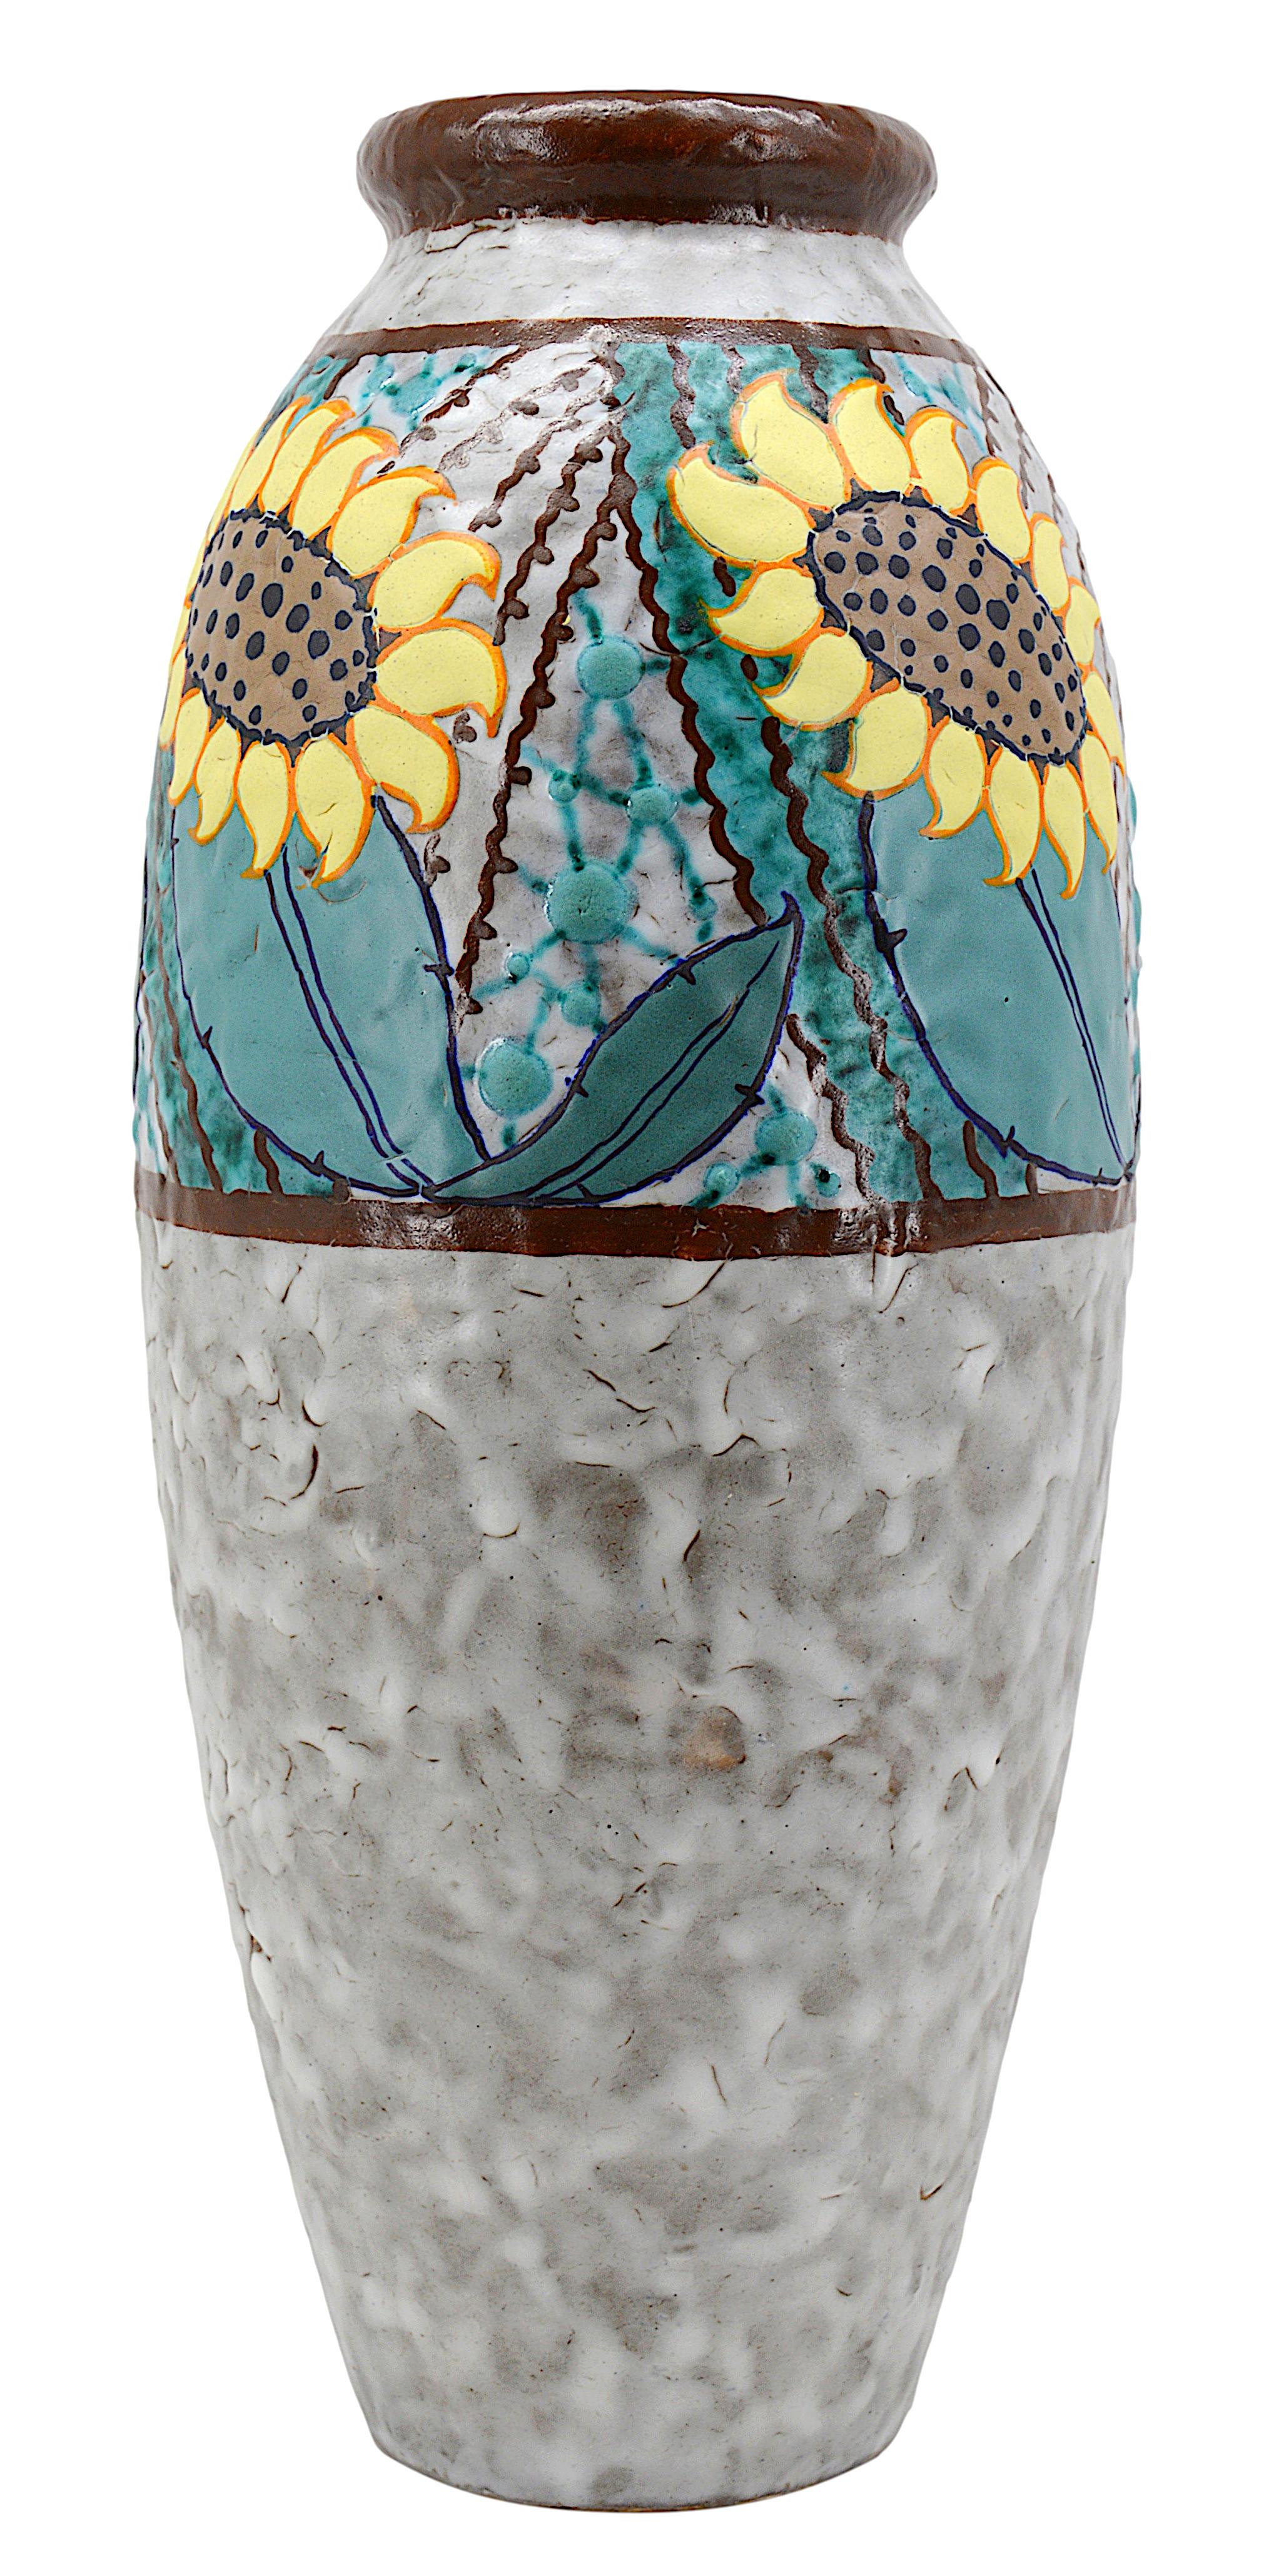 French Art Deco stoneware vase by Louis DAGE (Antony, Paris), France, late 1920s. Sunflower vase. Important enamel applications. Height: 19.3